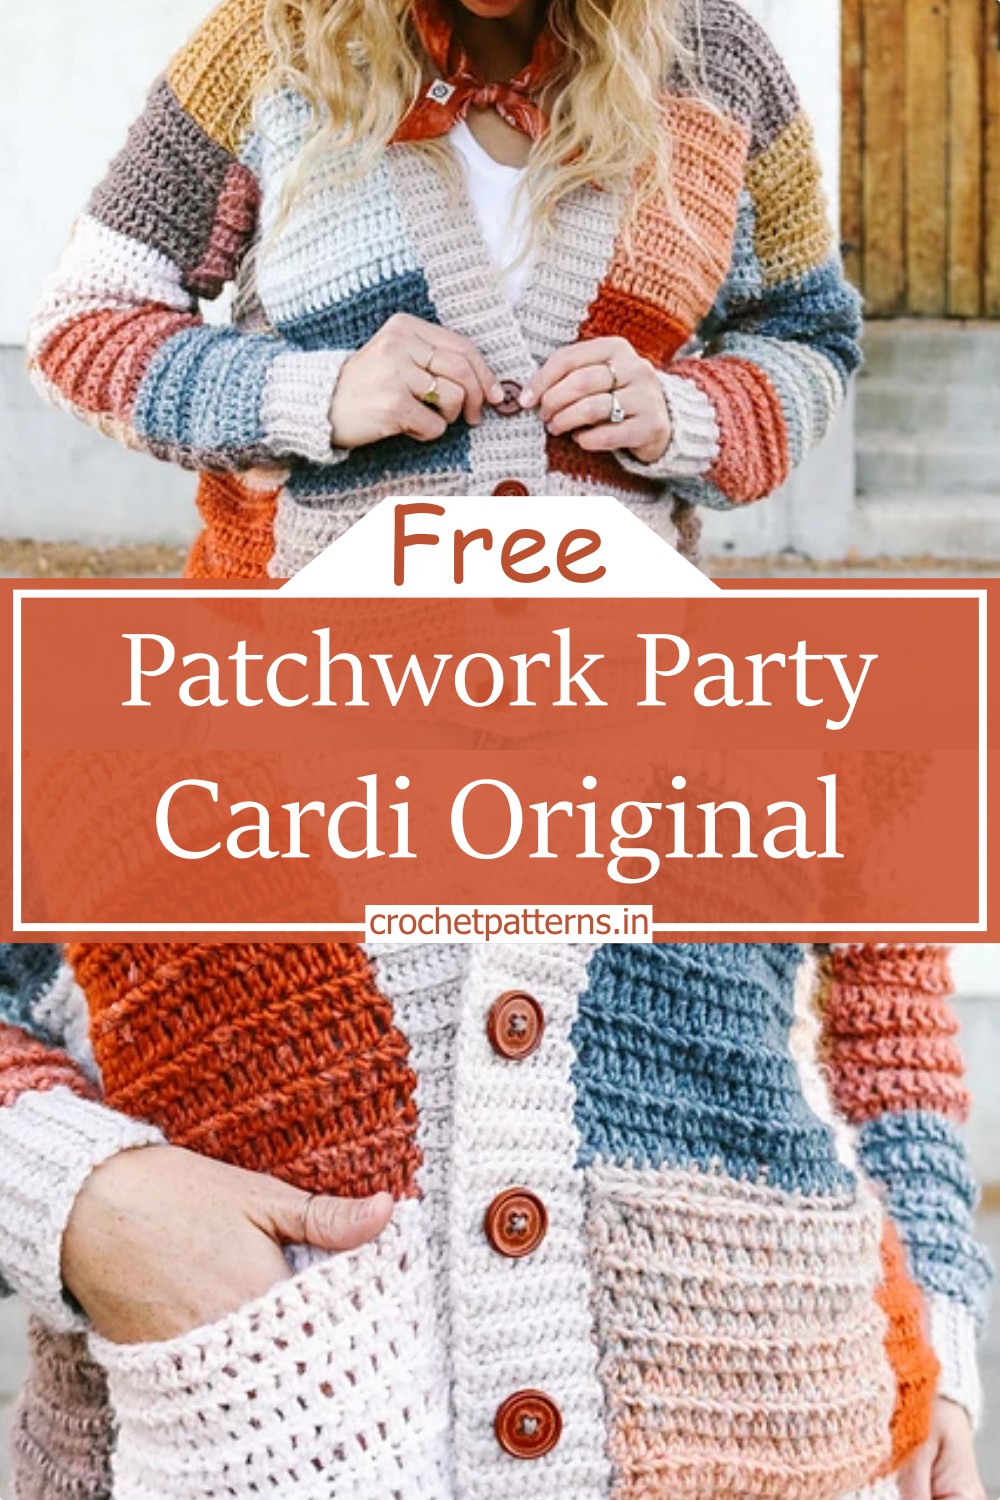 Patchwork Party Cardi Original